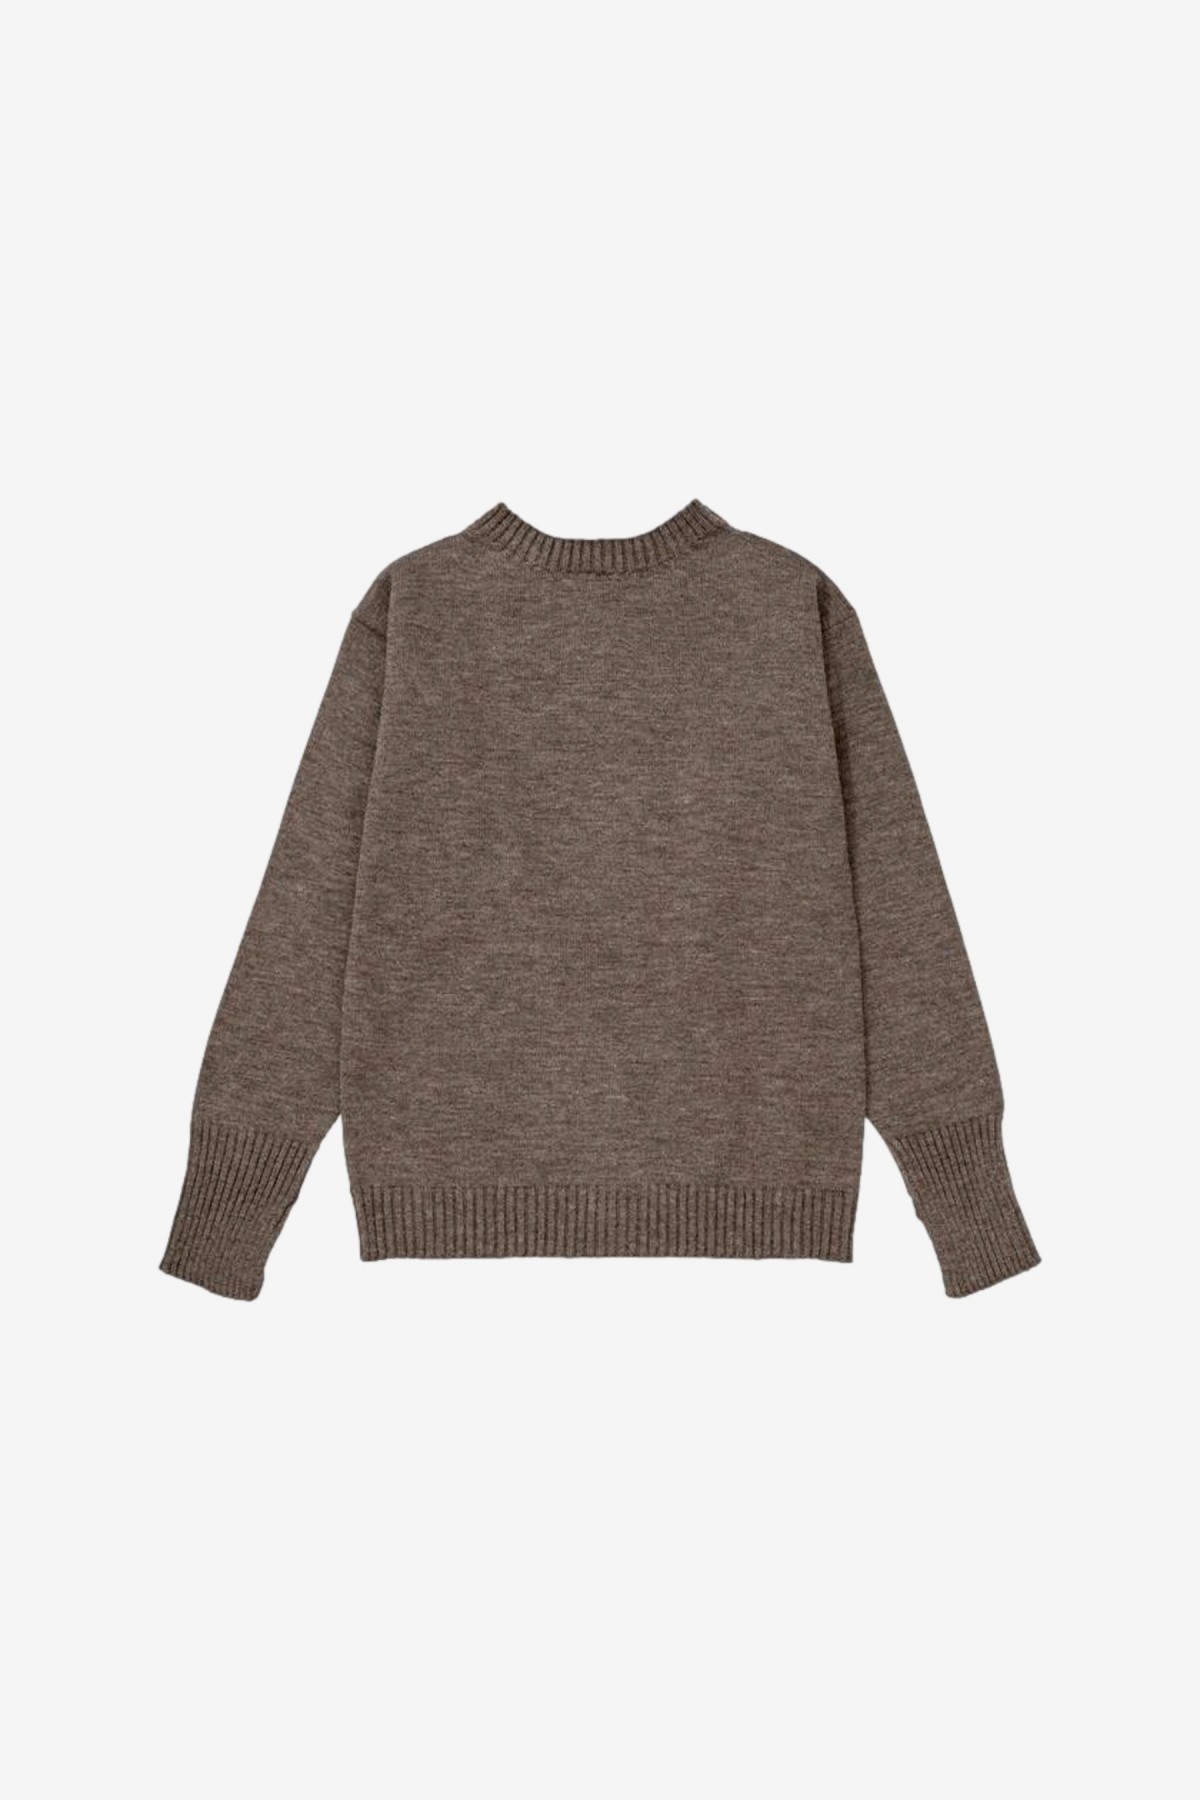 Seaman Sweater in Natural Taupe - Andersen-Andersen | Afura Store